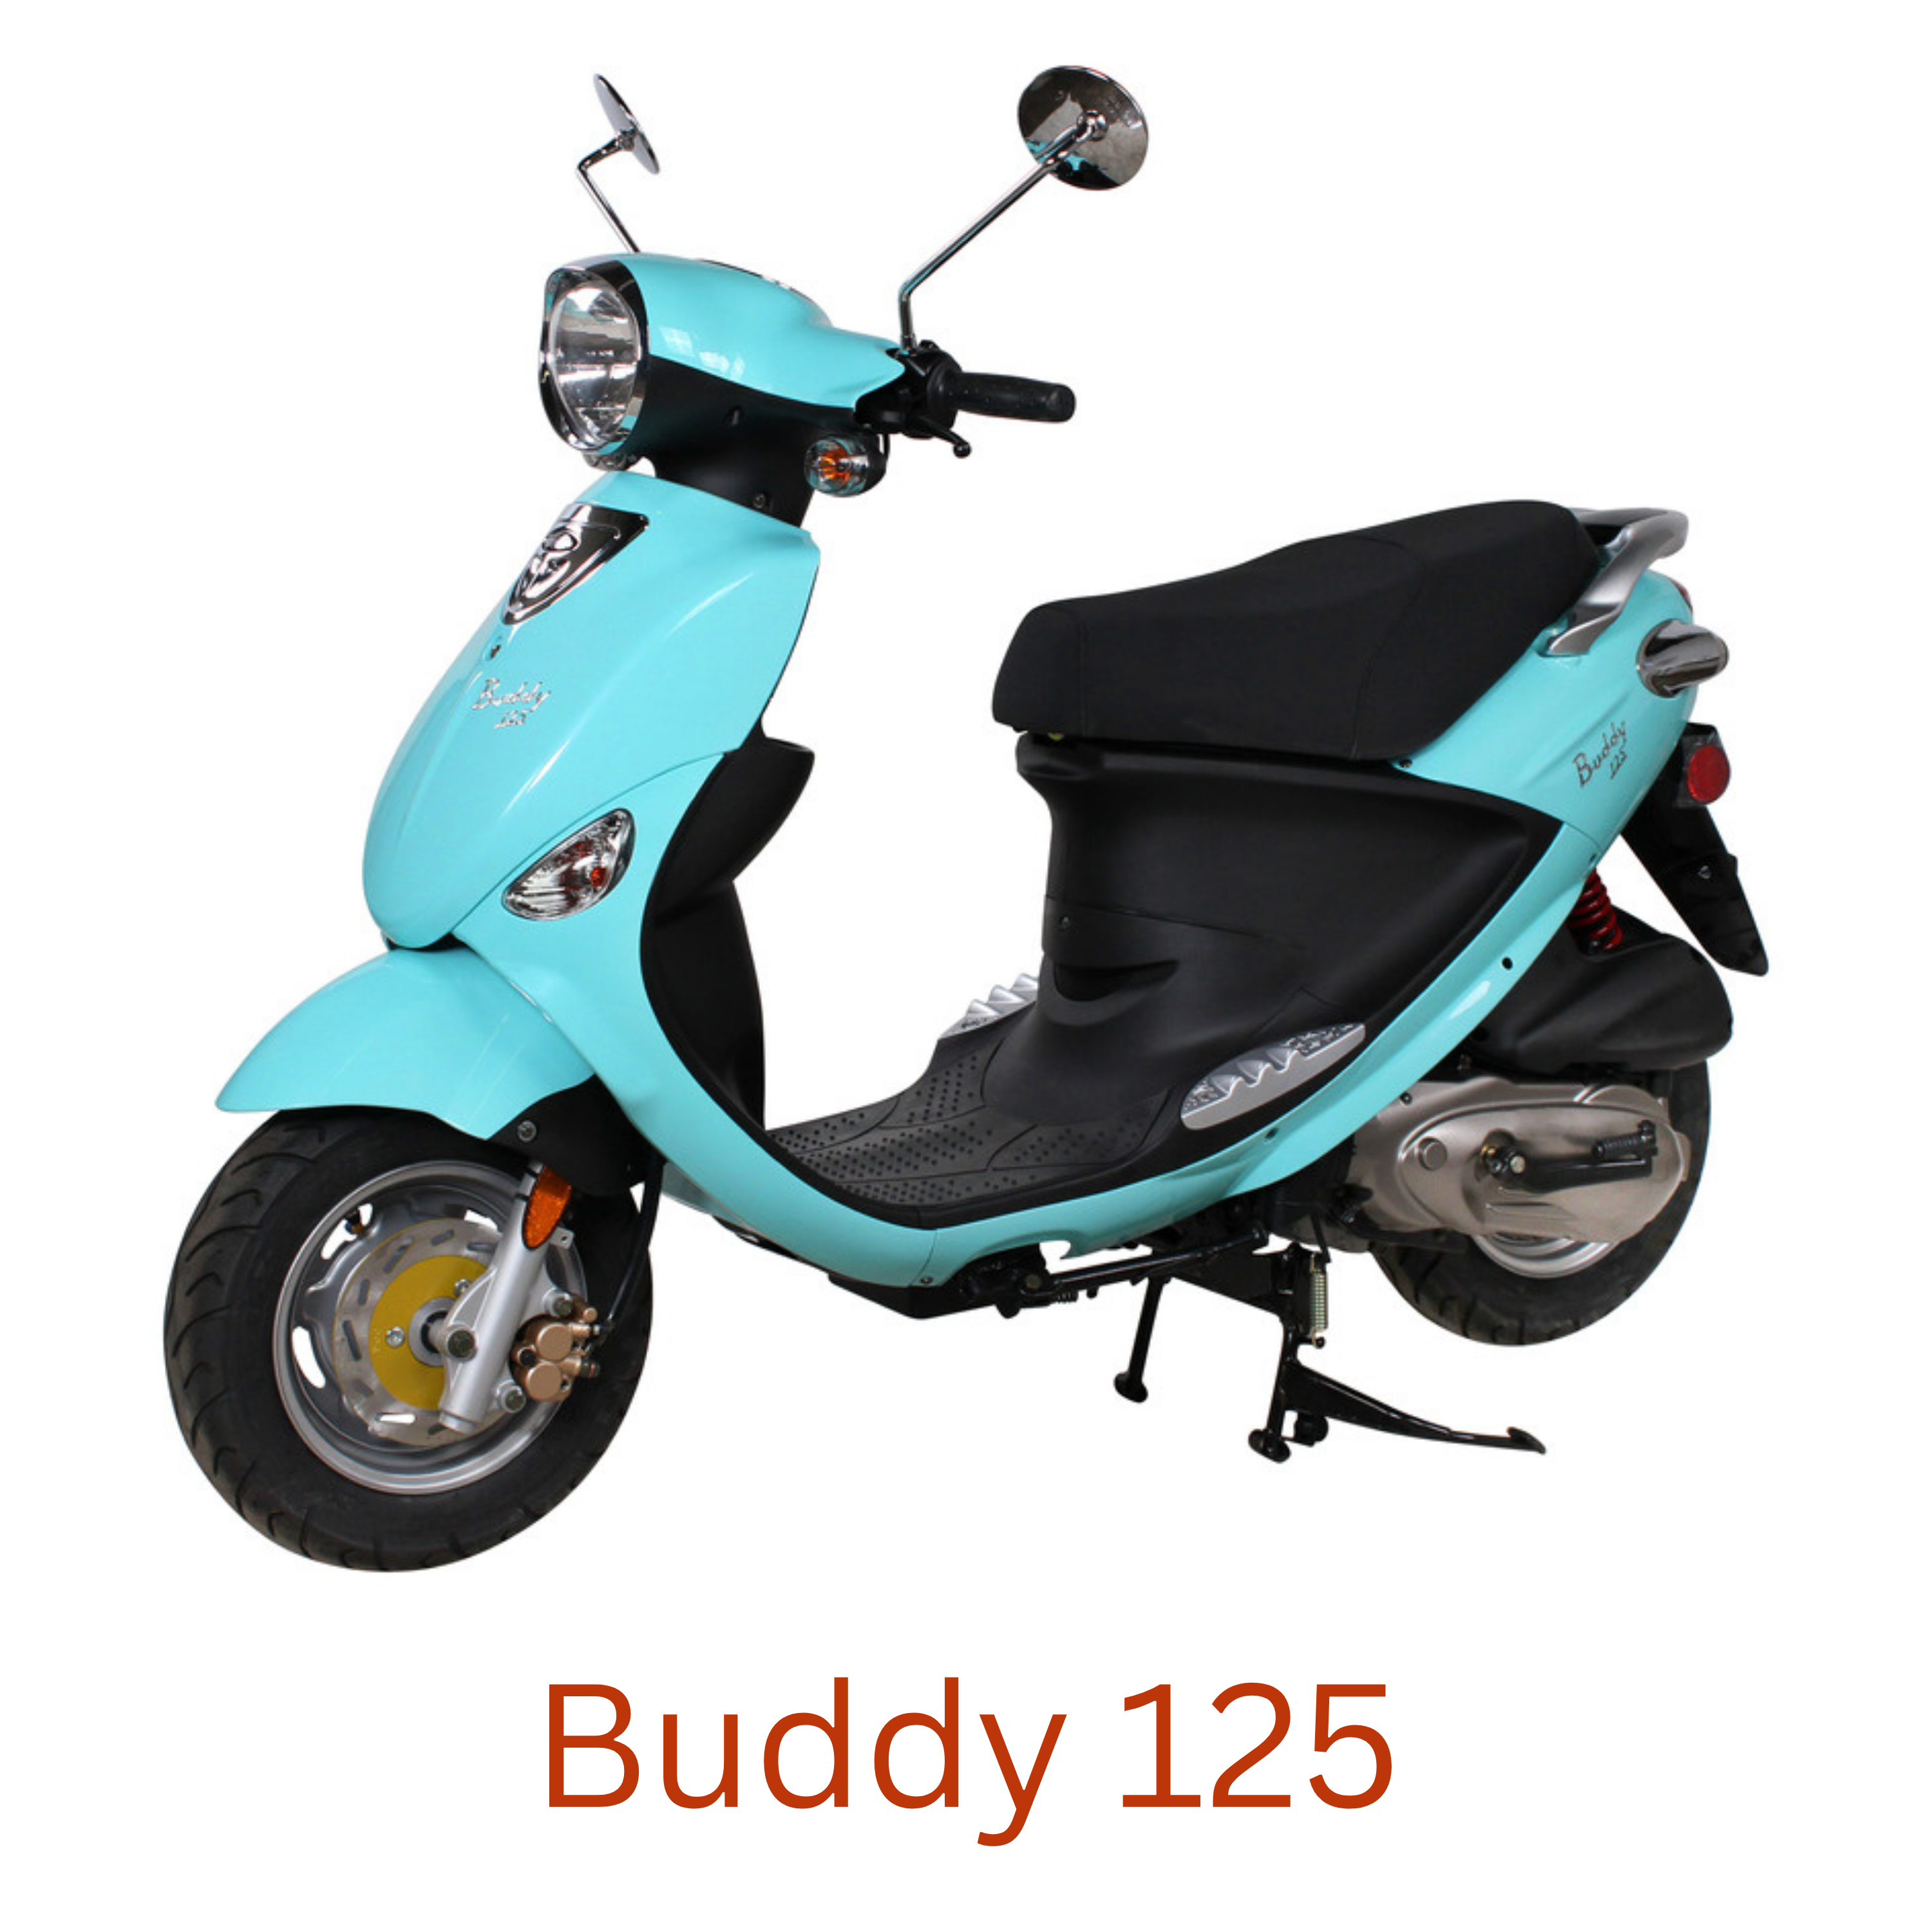 Buddy 125